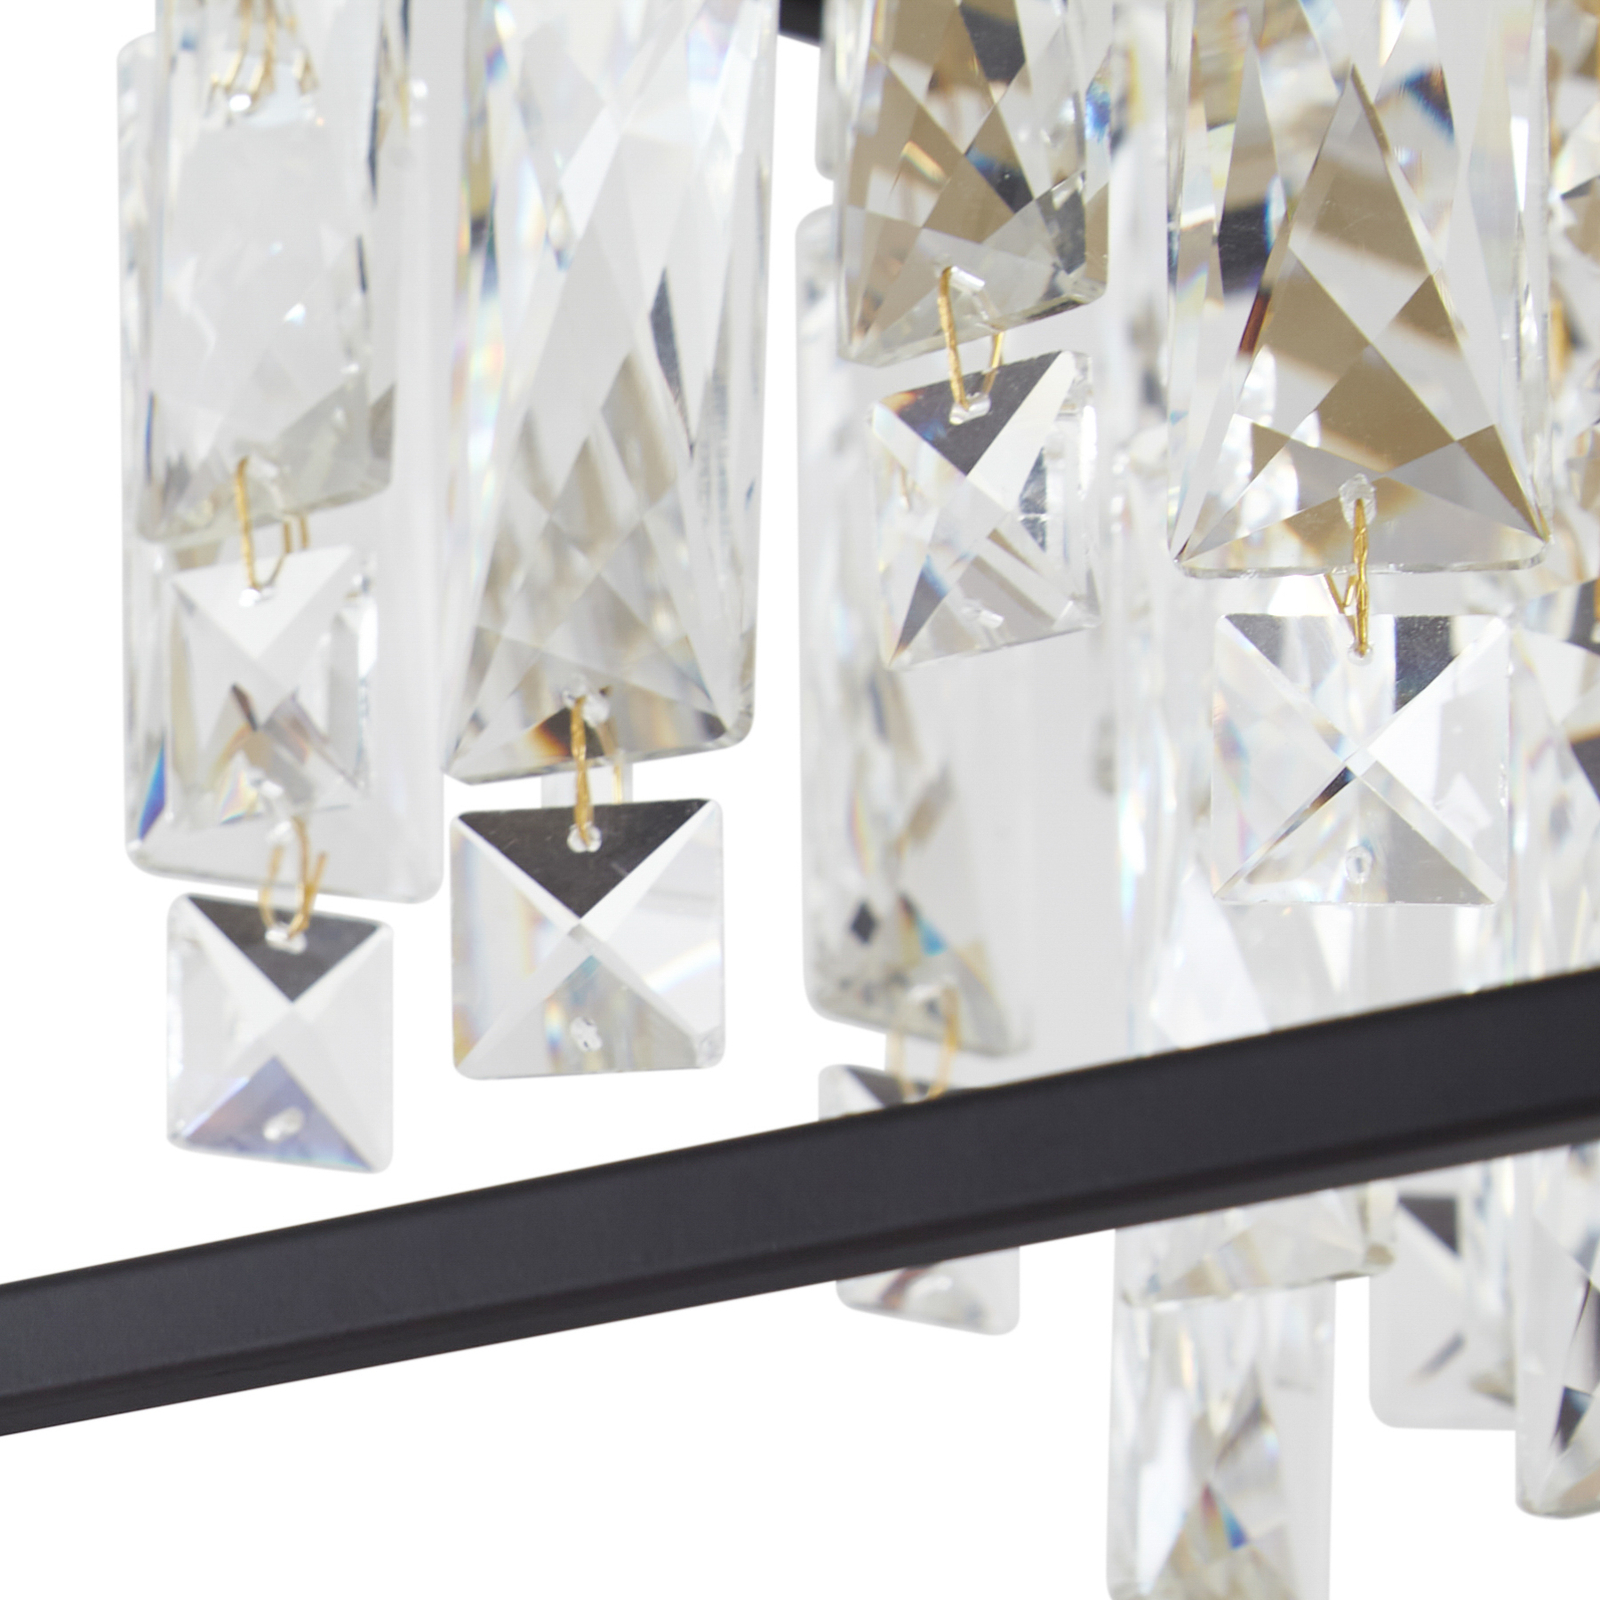 Lucande Kassi LED-Deckenlampe 3.000K, dimmbar, Kristalloptik